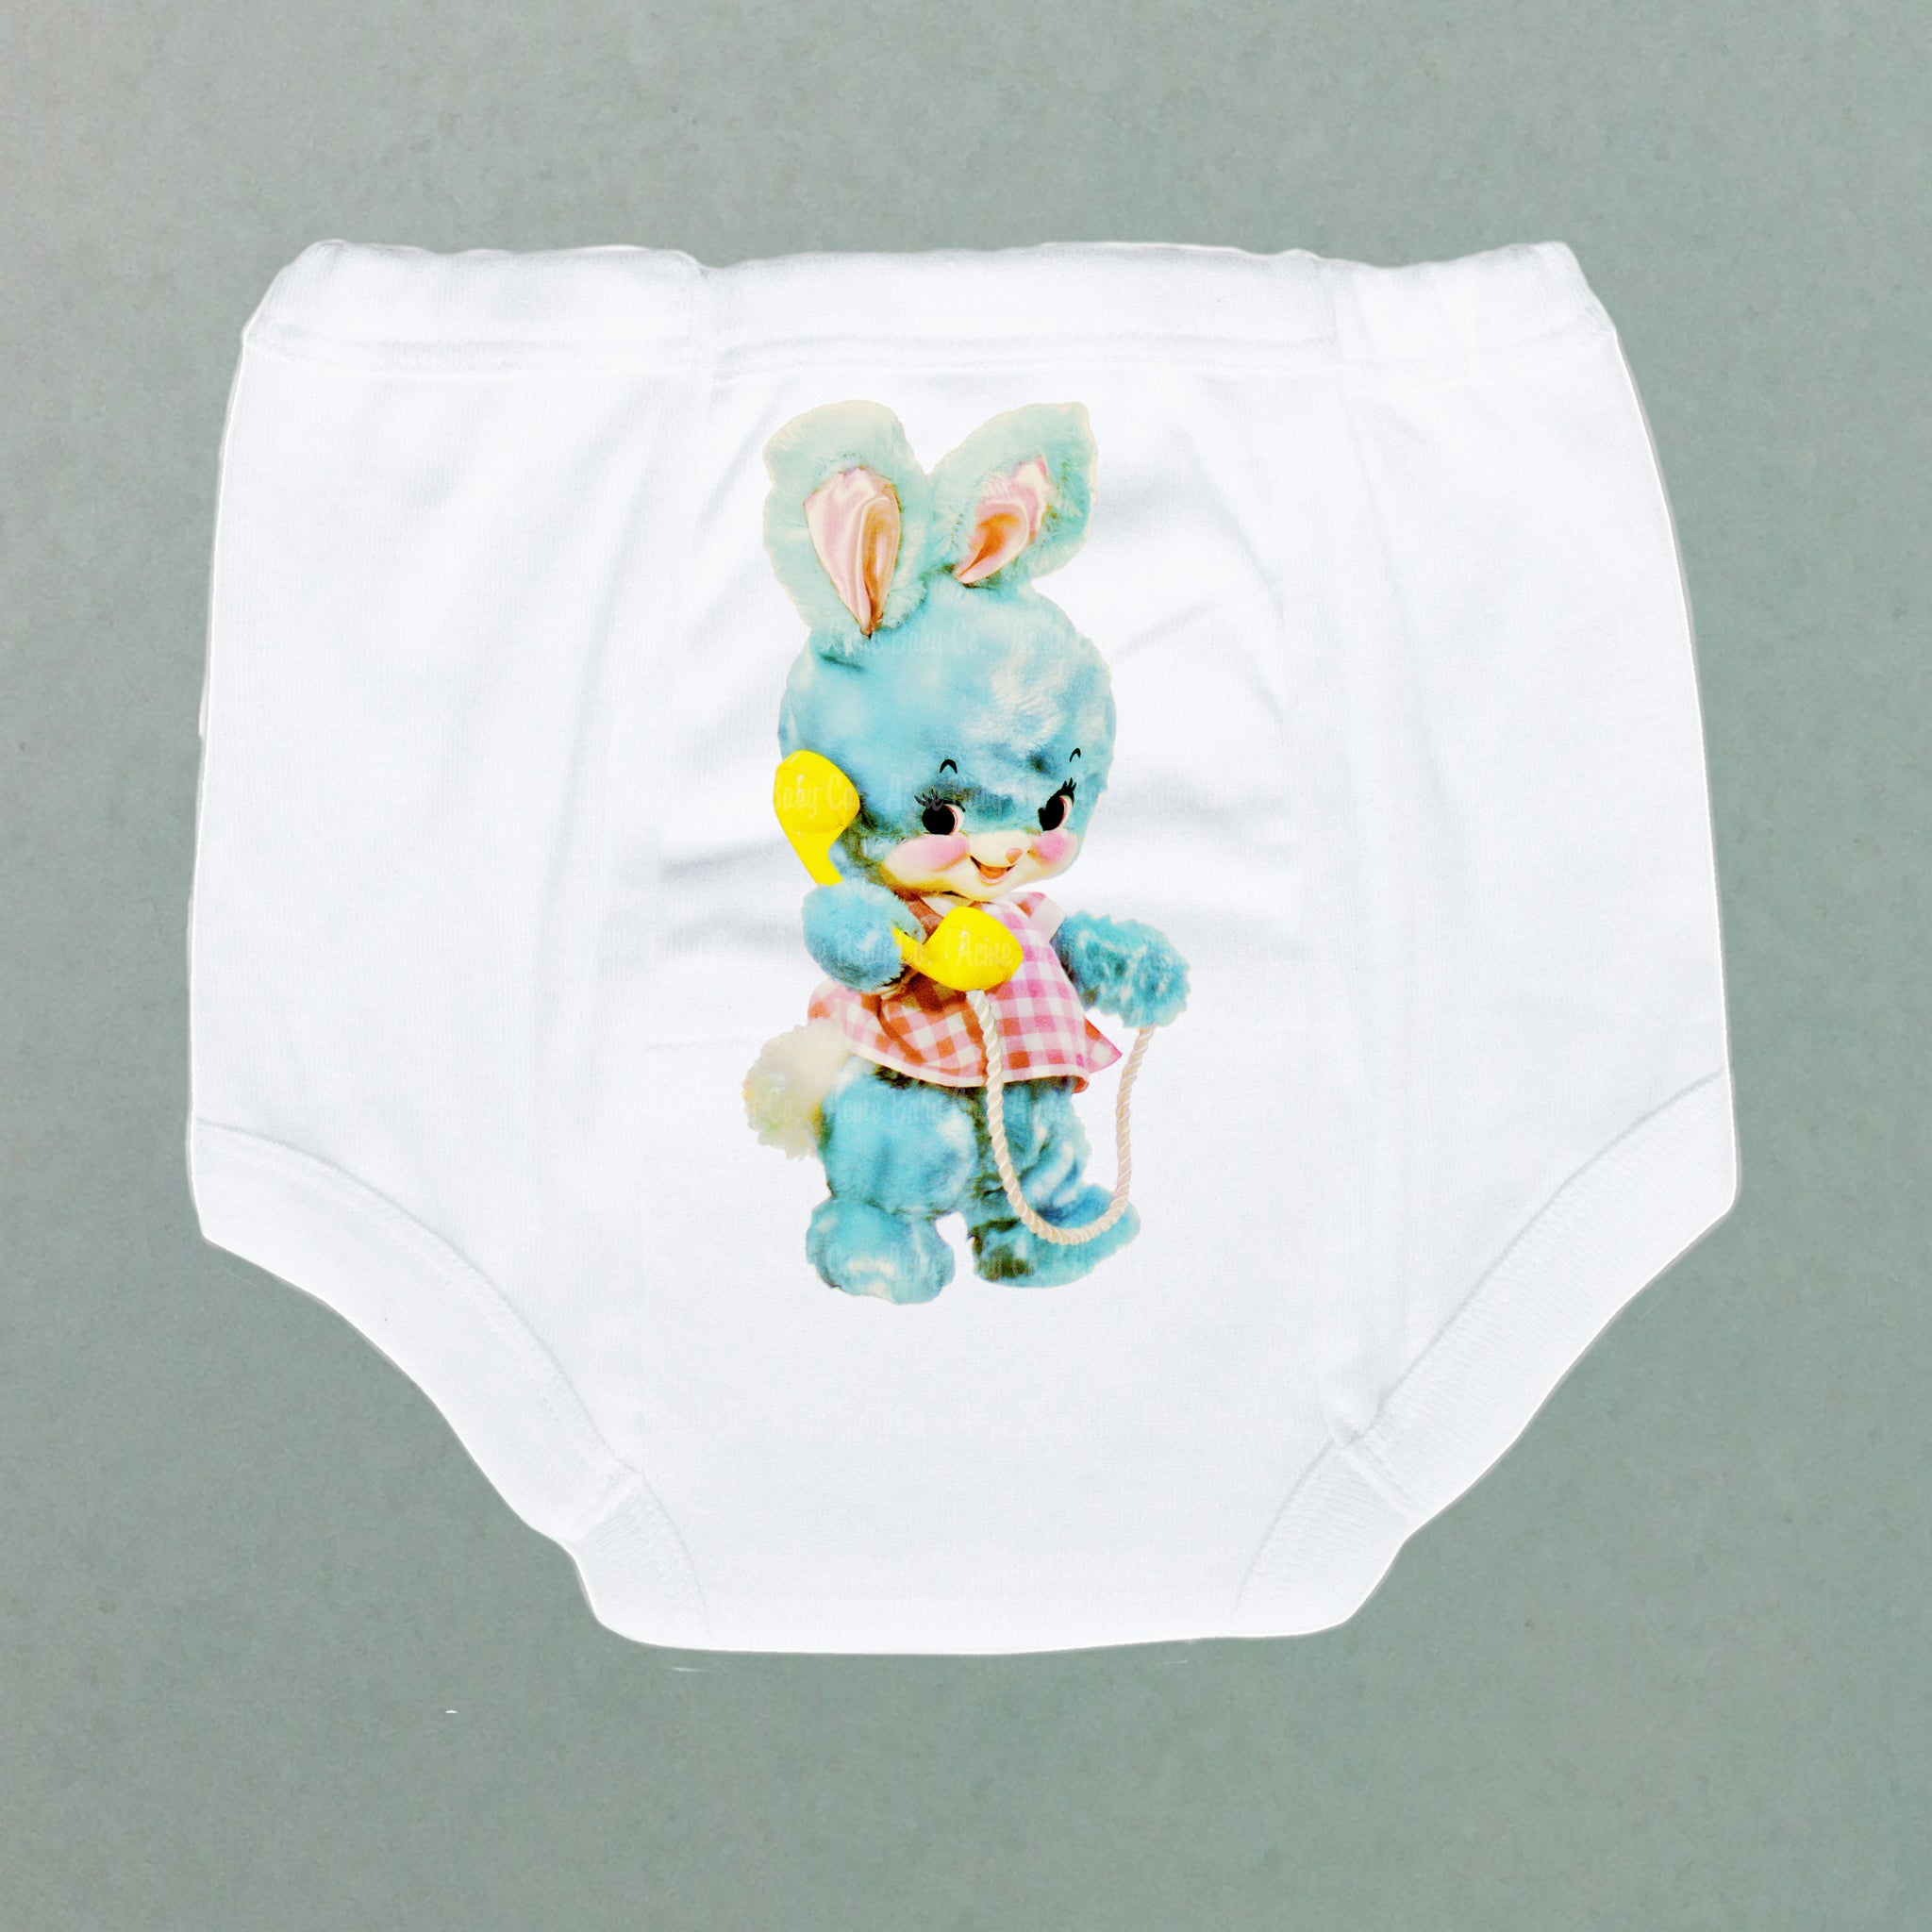 1-3 Baby Toddler Toddler Potty Training Pants Washable Diaper Underwear  Girl Boy | eBay